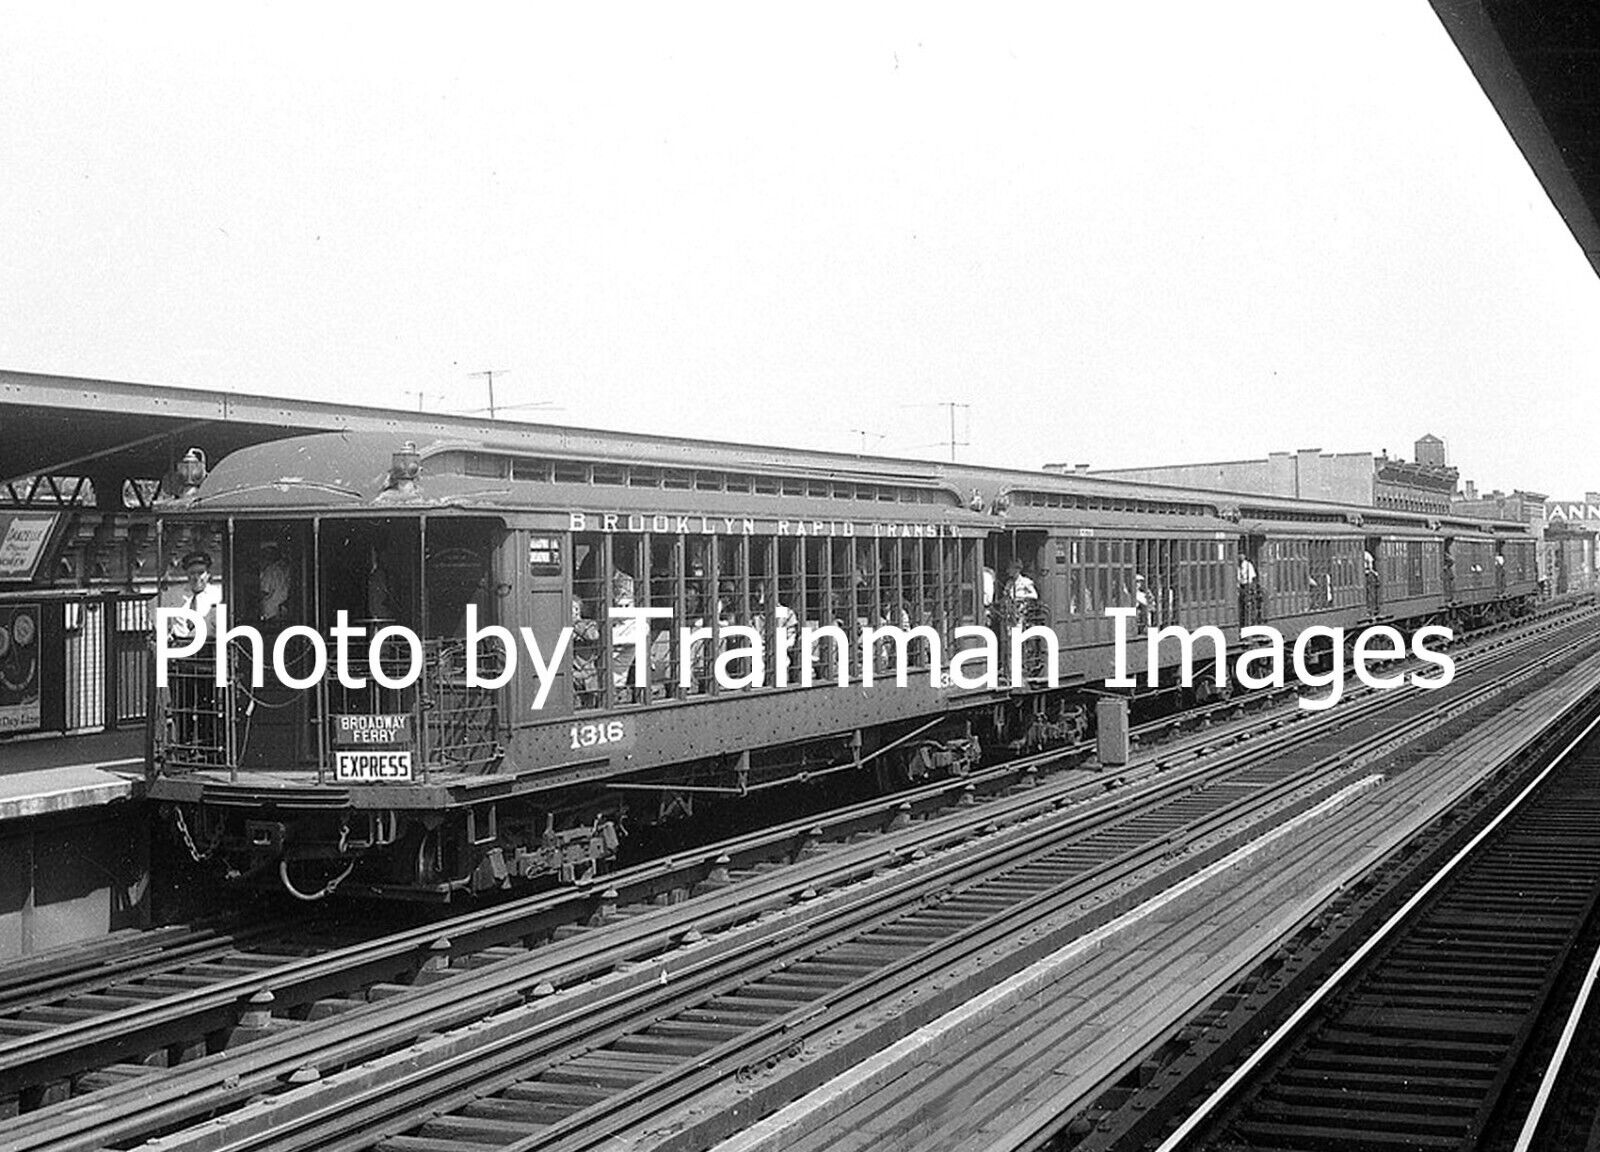 Vintage Subway Photos (5): NYCTA, New York City - 1955 to 1960